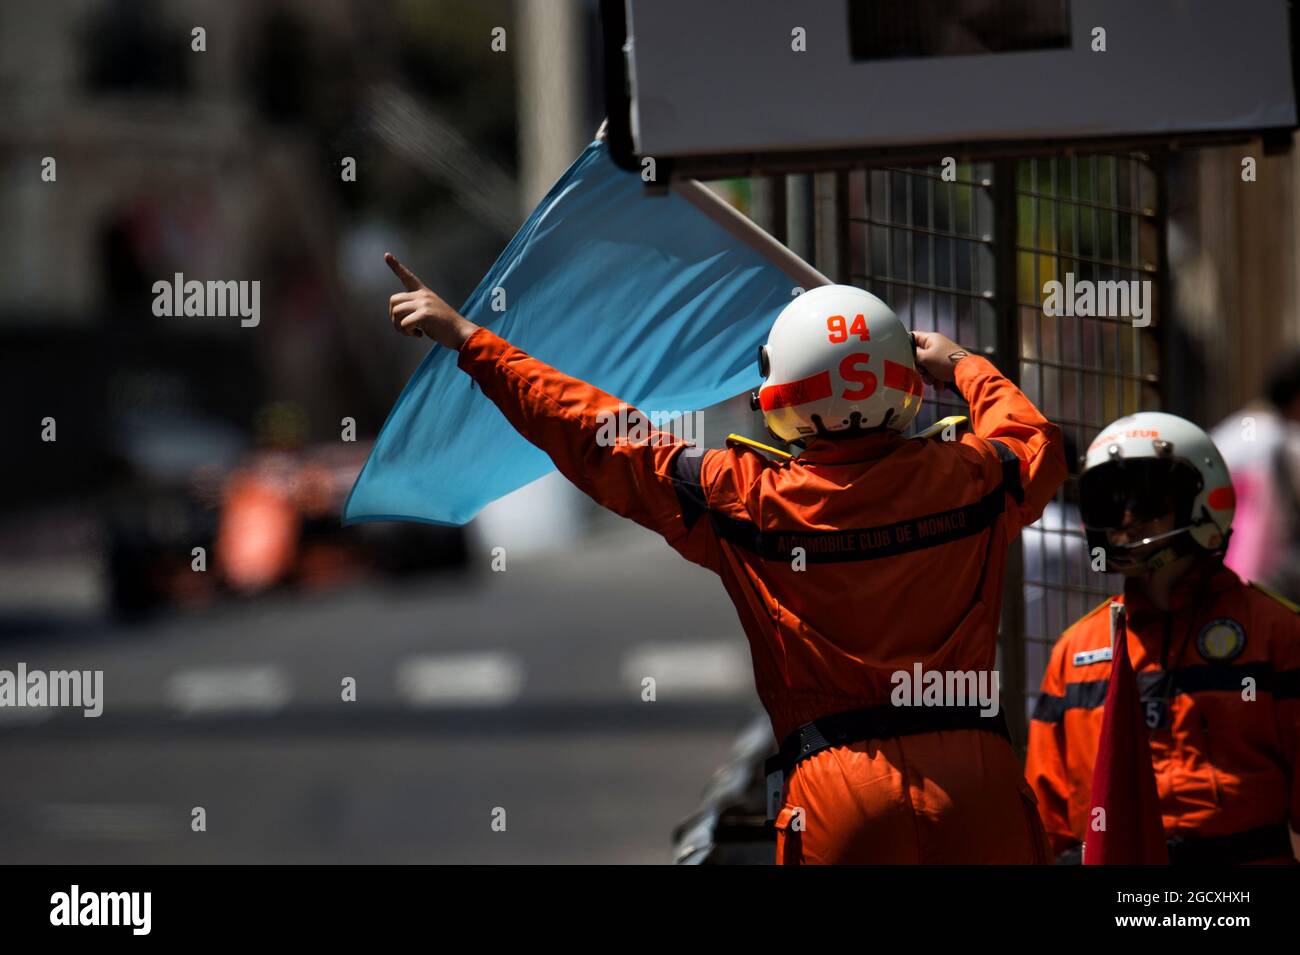 A marshal waves a blue flag. Monaco Grand Prix, Saturday 27th May 2017. Monte Carlo, Monaco. Stock Photo